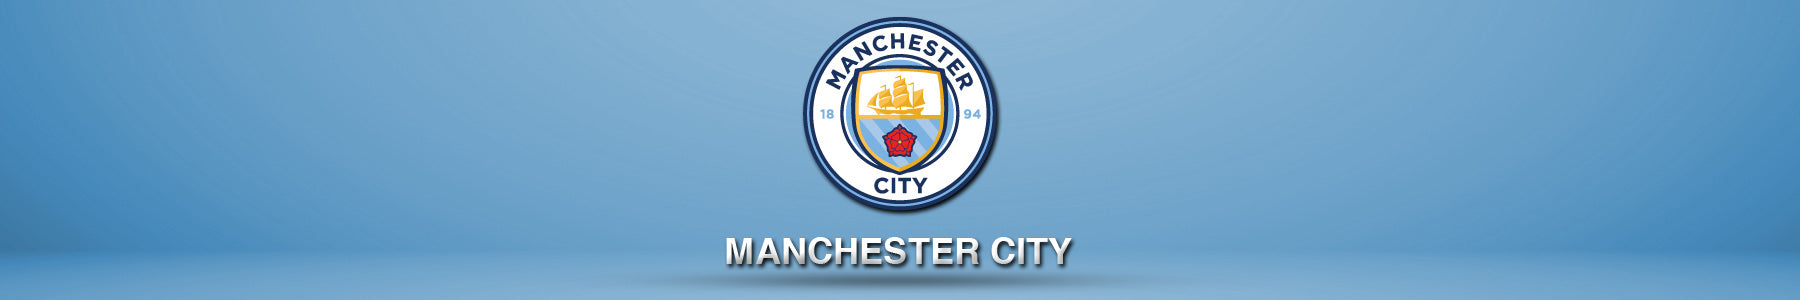 Manchester City FC Banner